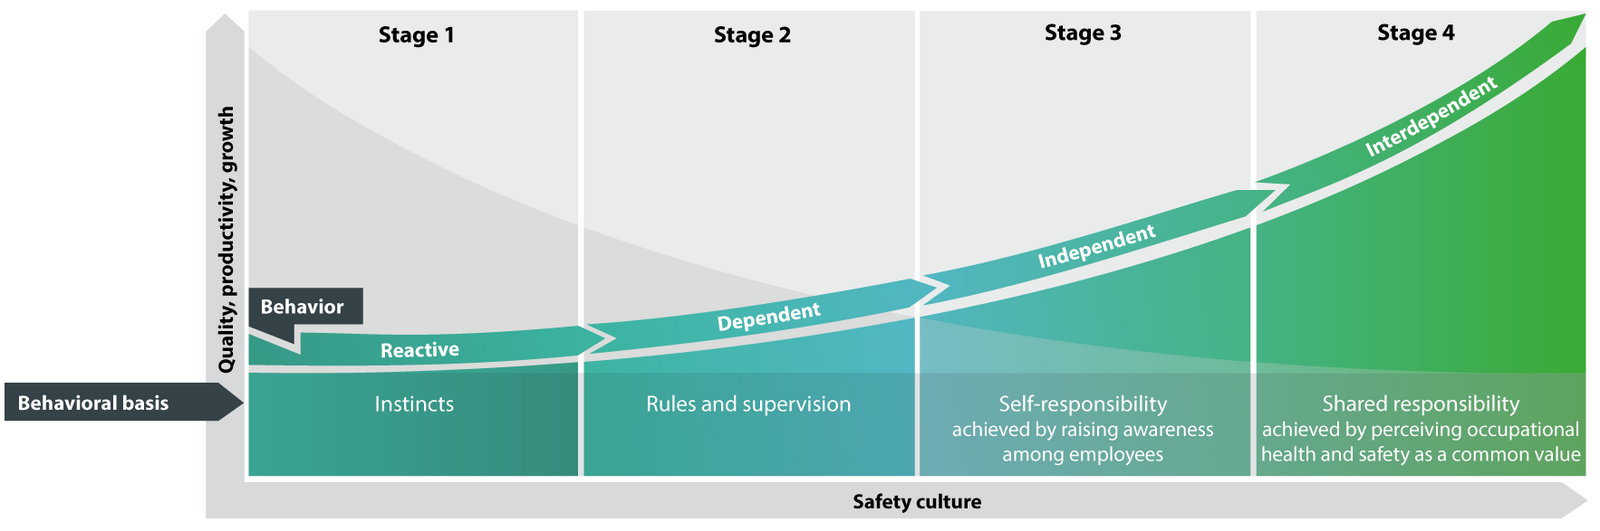 bradley curve safety culture productivity